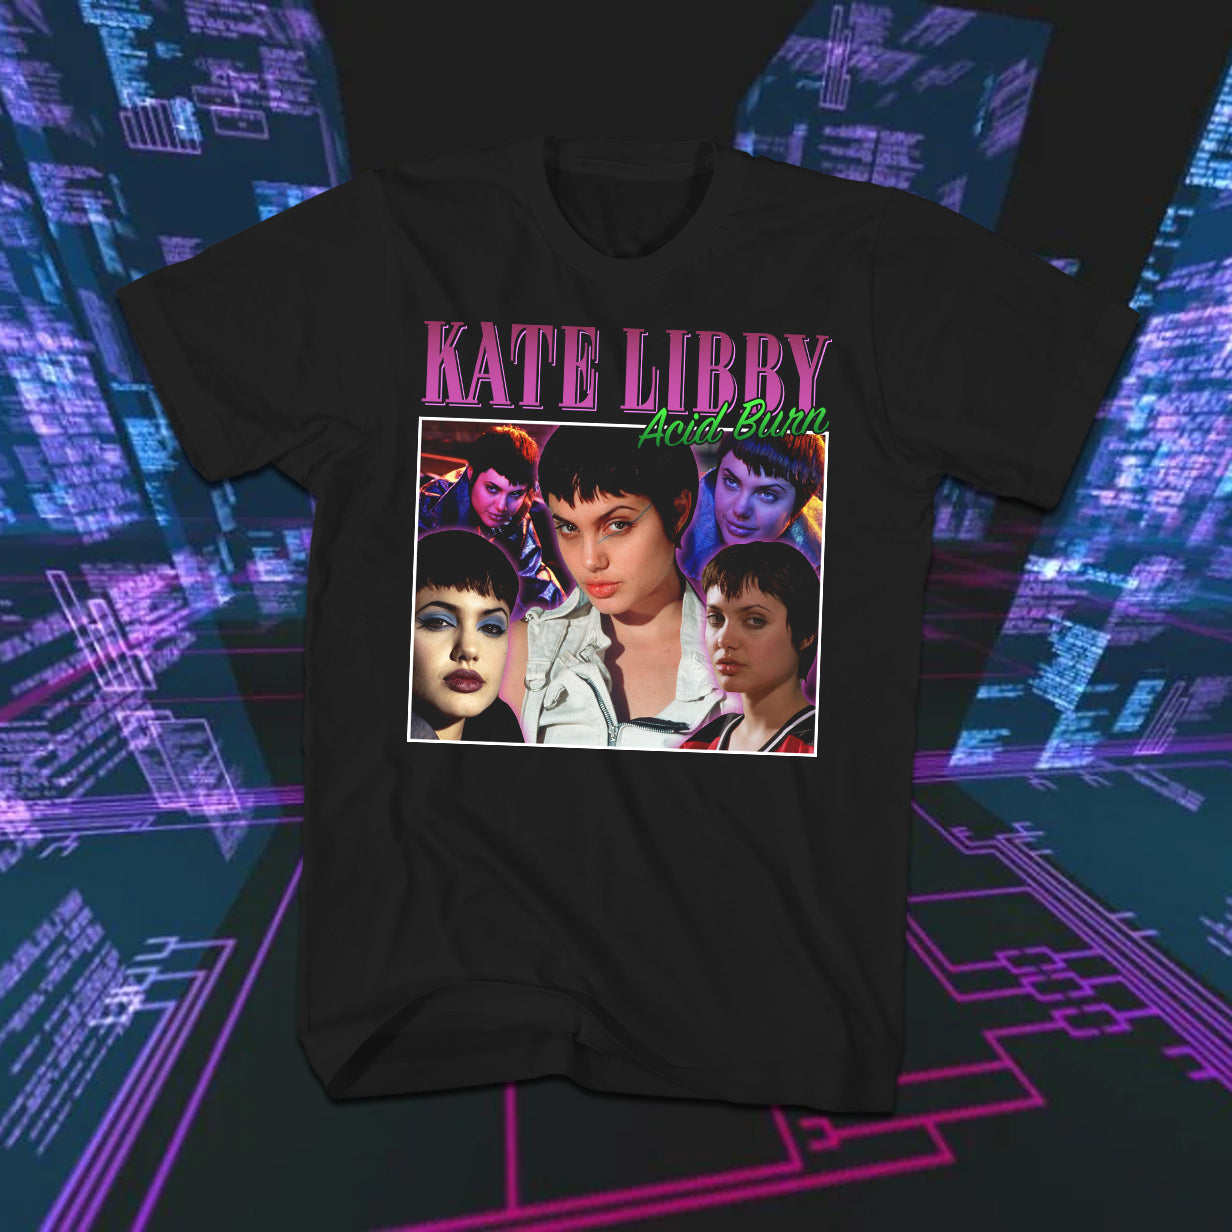 Kate Libby 90s Bootleg t-shirt